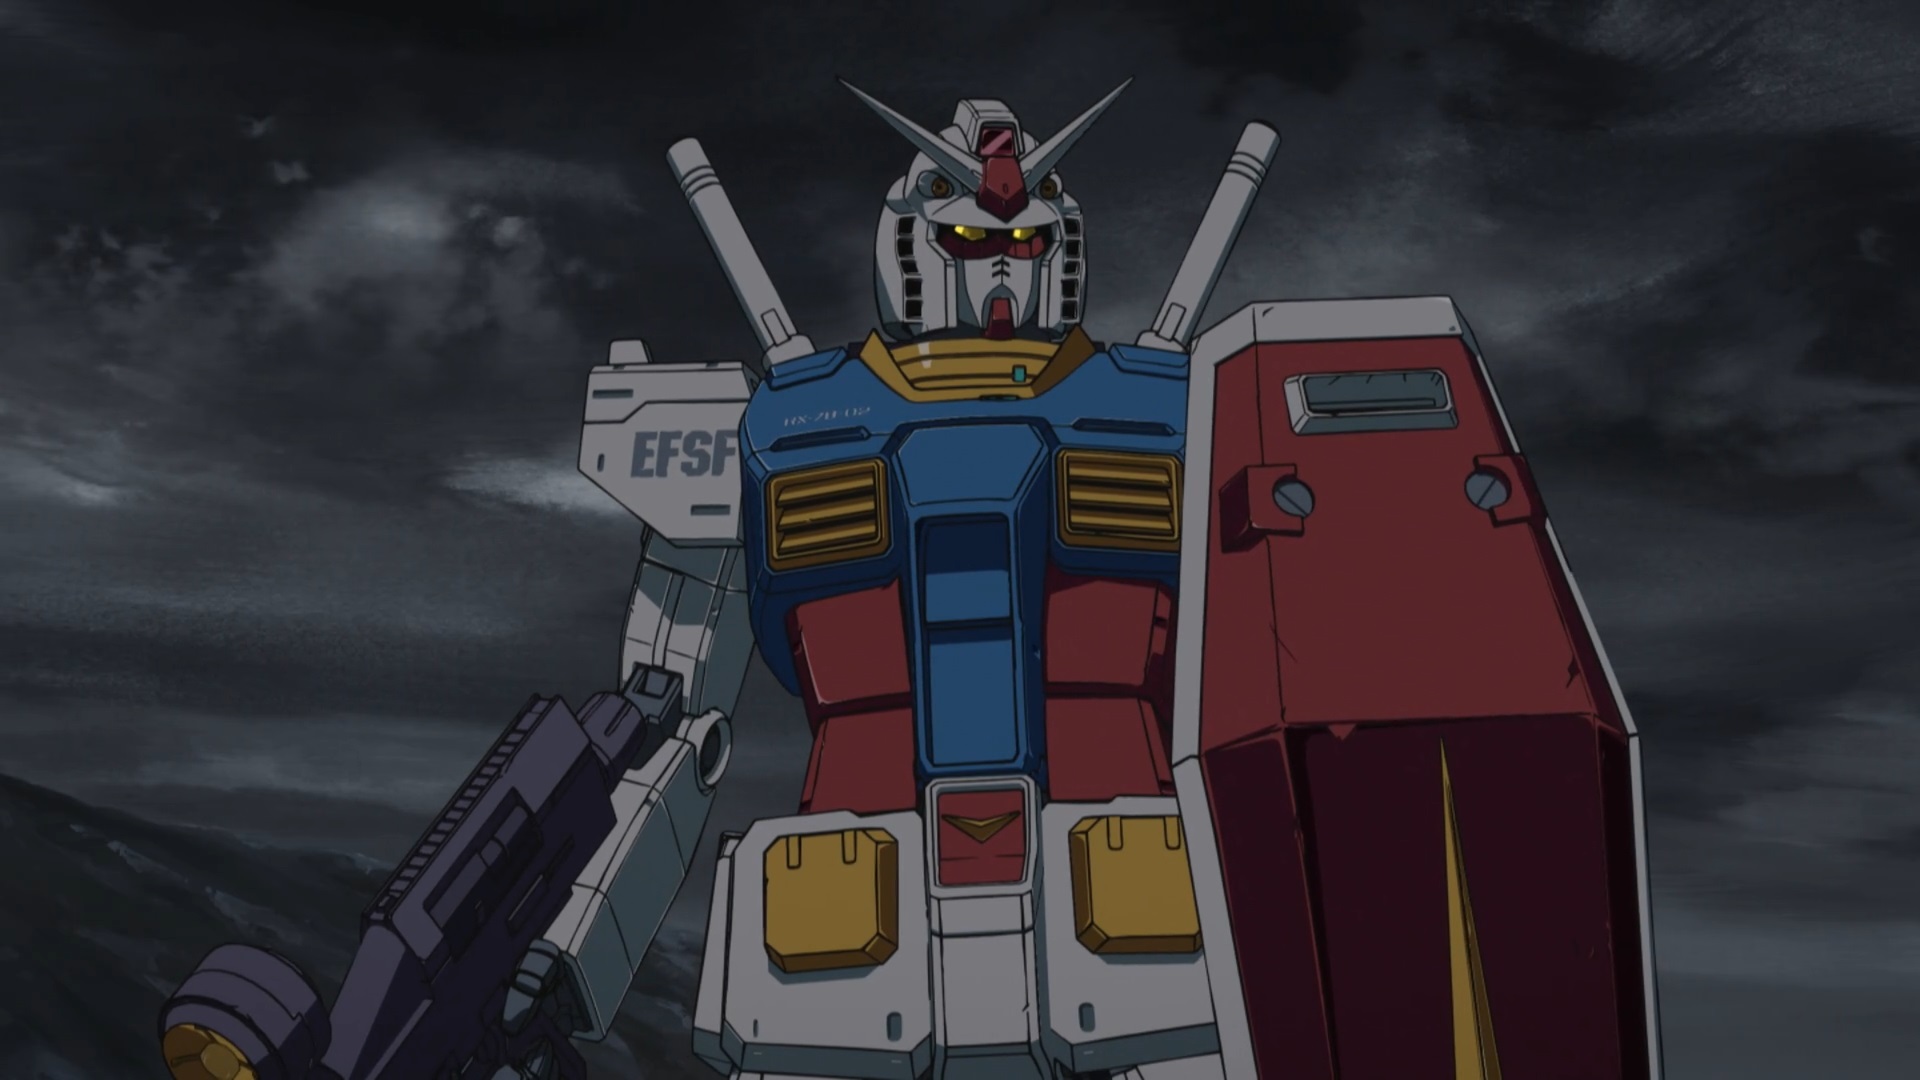 Anime 1920x1080 anime mechs Anime screenshot Mobile Suit Gundam Gundam Super Robot Taisen RX-78 Gundam artwork digital art